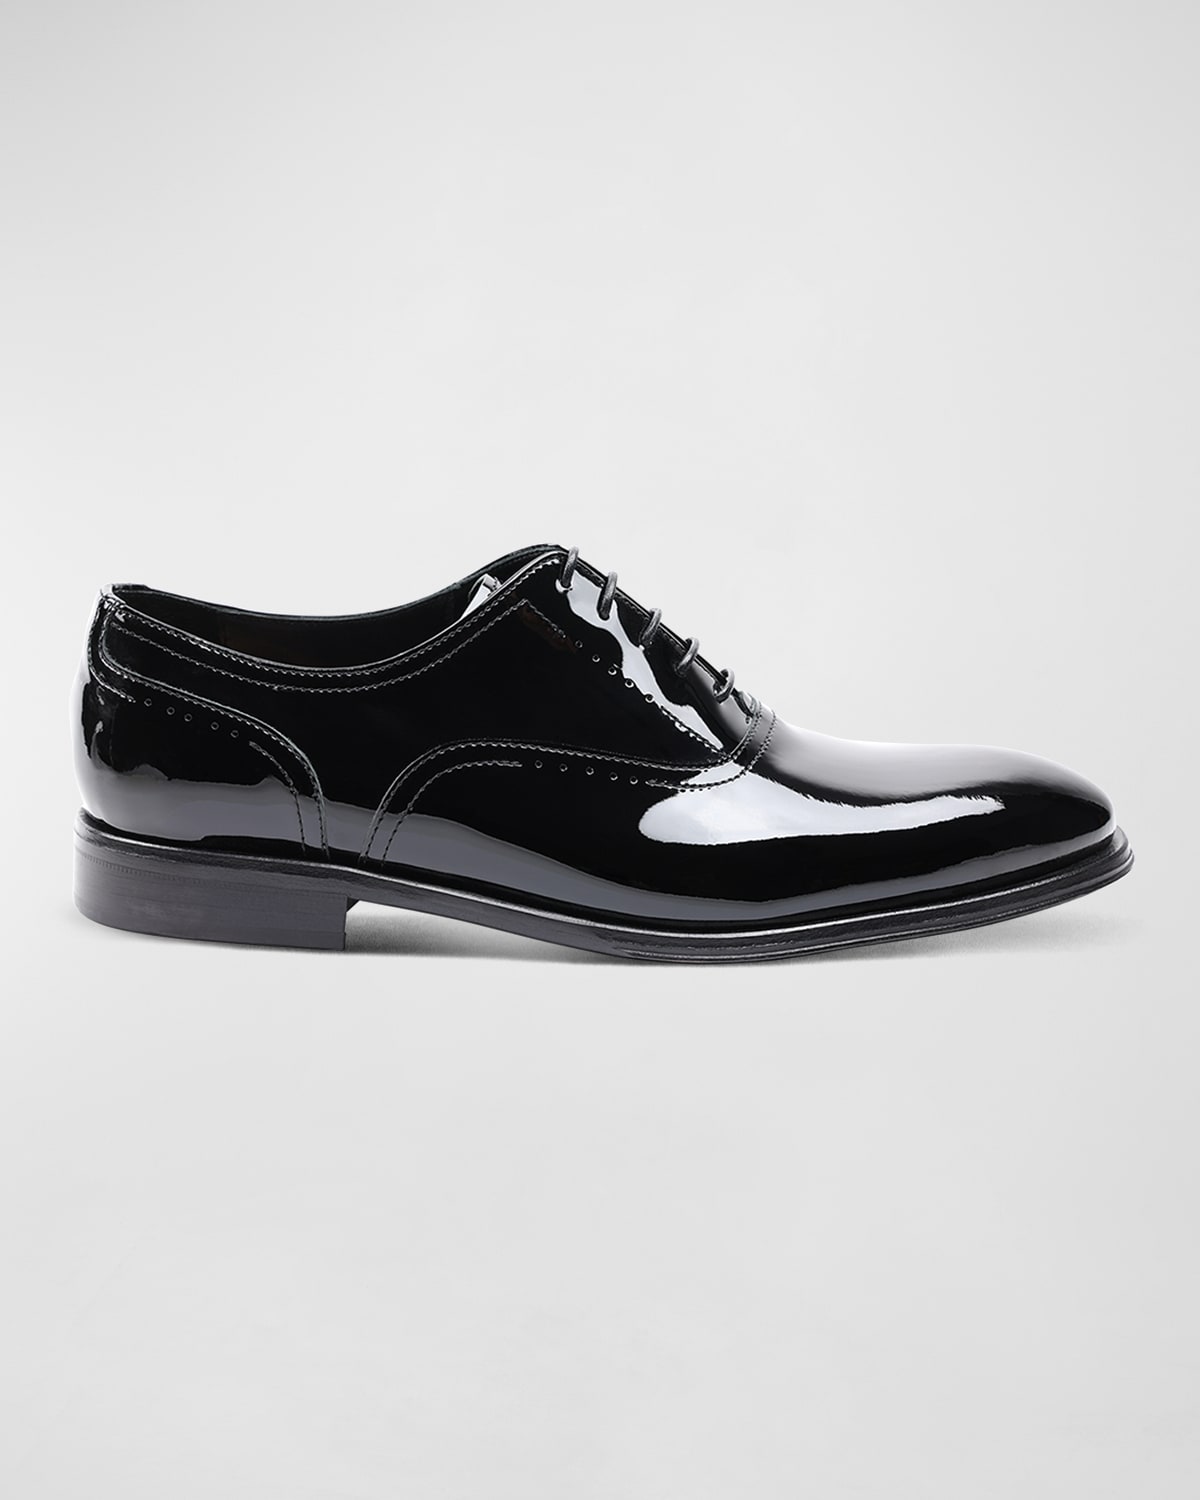 Men's Arno Sera Patent Leather Oxford Shoes